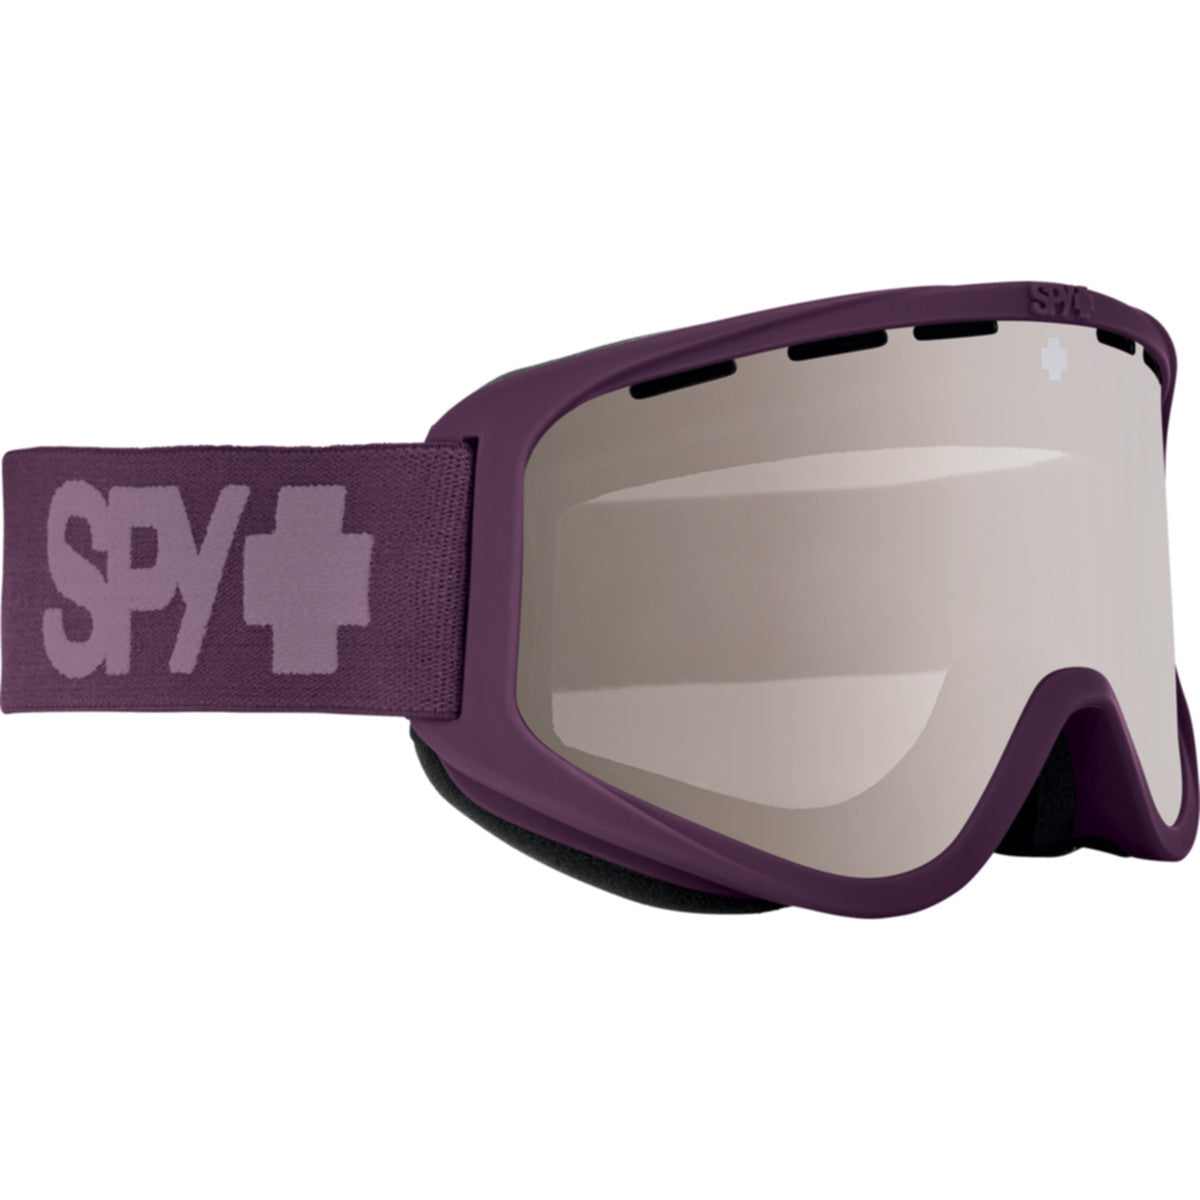 Spy WOOT Goggles  Matte Purple Small, Small-Medium, Medium, Medium-Large